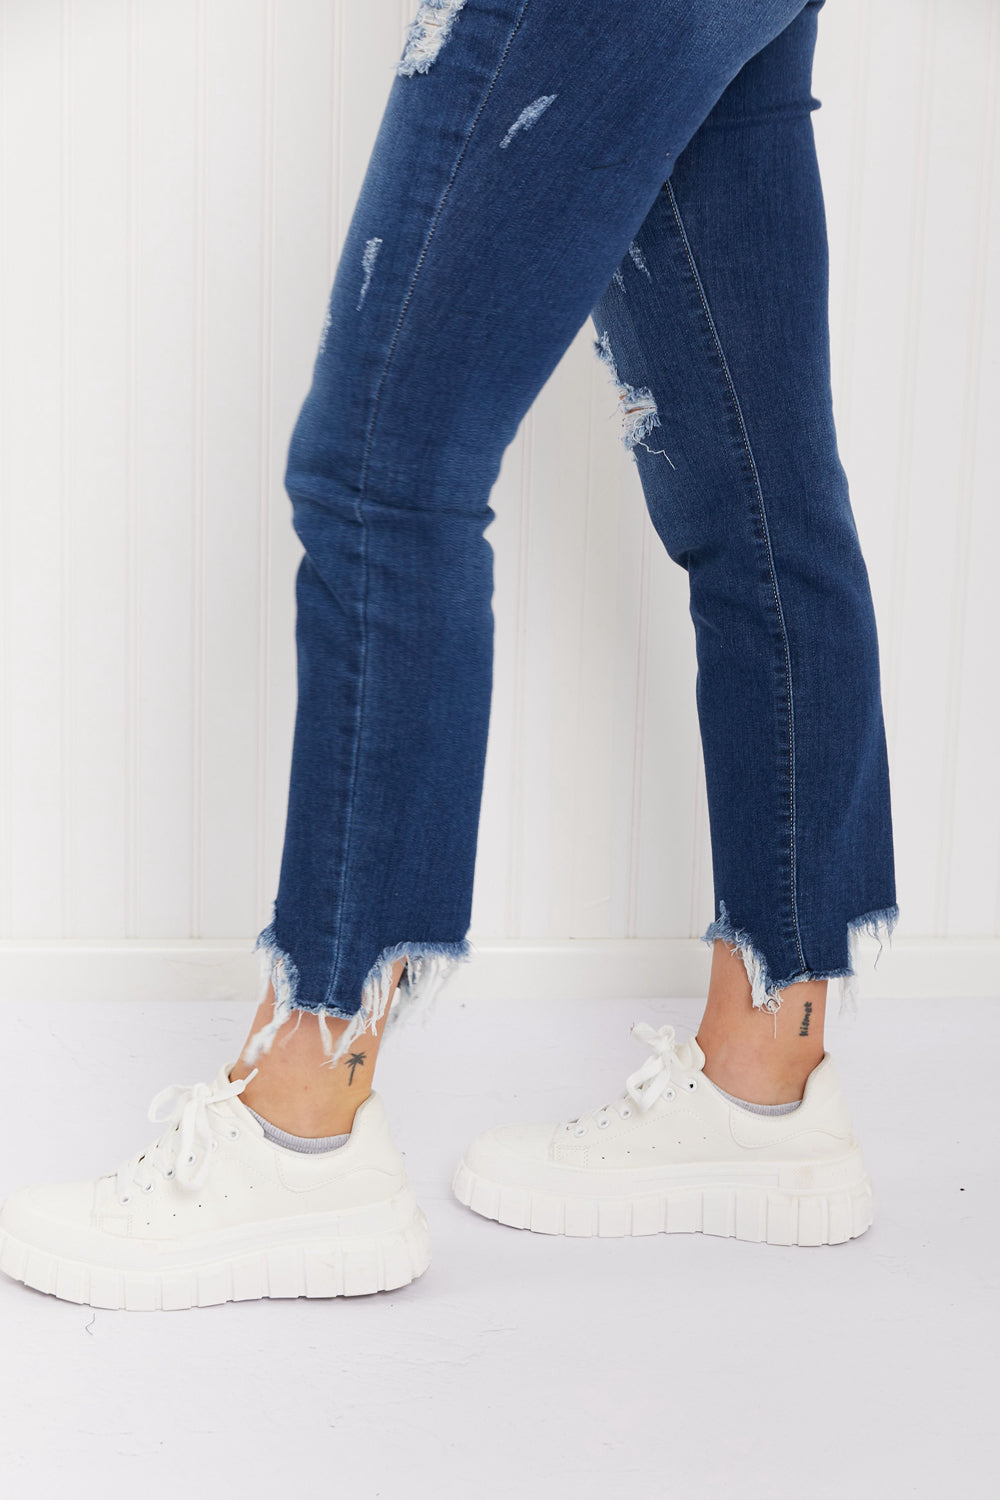 Judy Blue Kendall Full Size Shark-Bite Slim Jeans Jeans JT's Designer Fashion